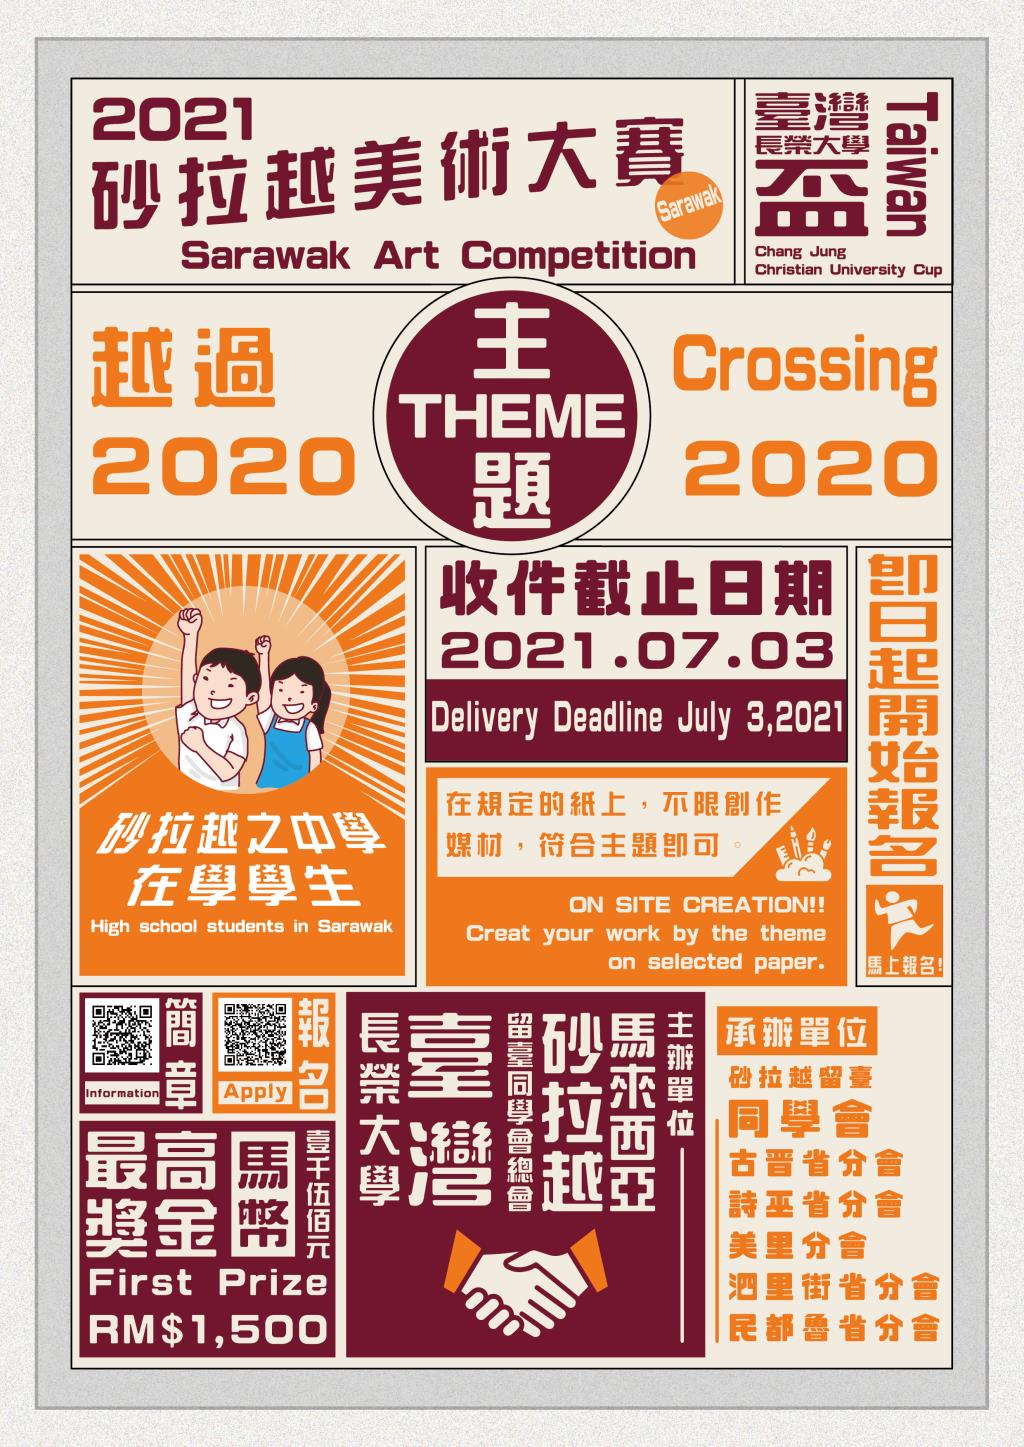 2021 Sarawak Art Competition - Chang Jung Christian University Cup, Taiwan